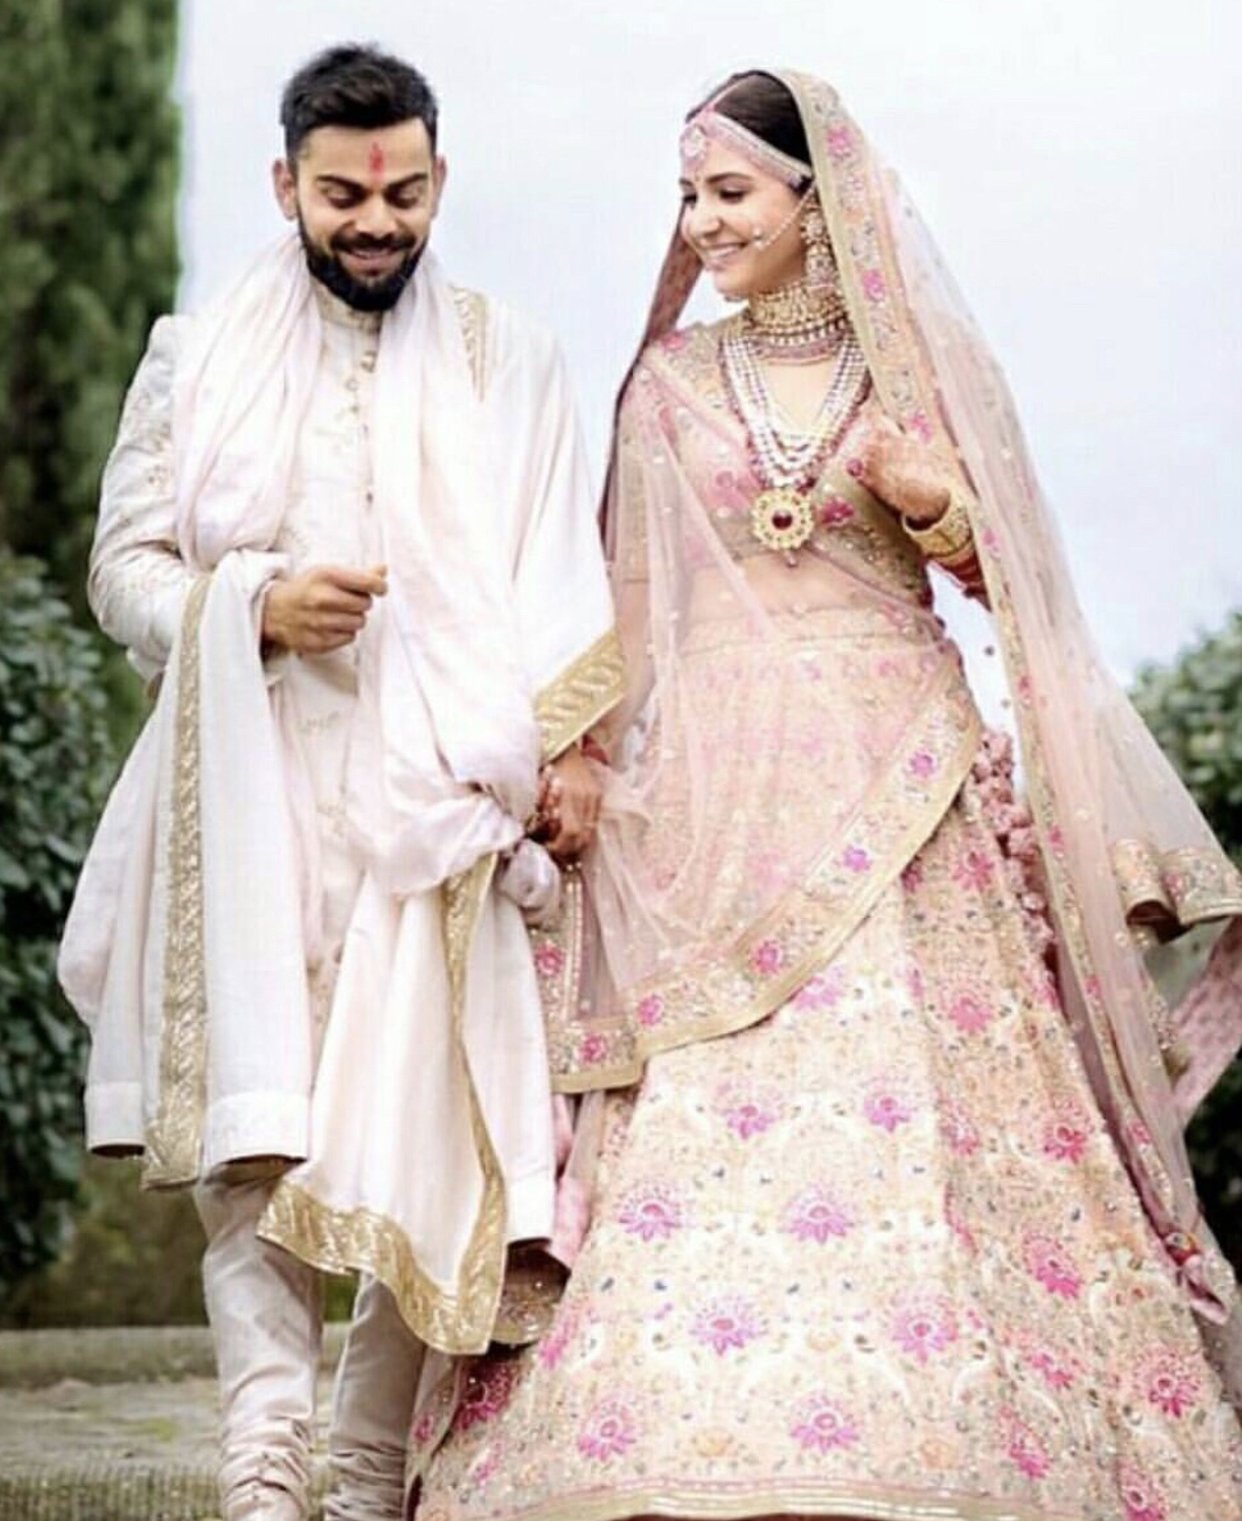 virat kohli and anushka sharma wedding picture